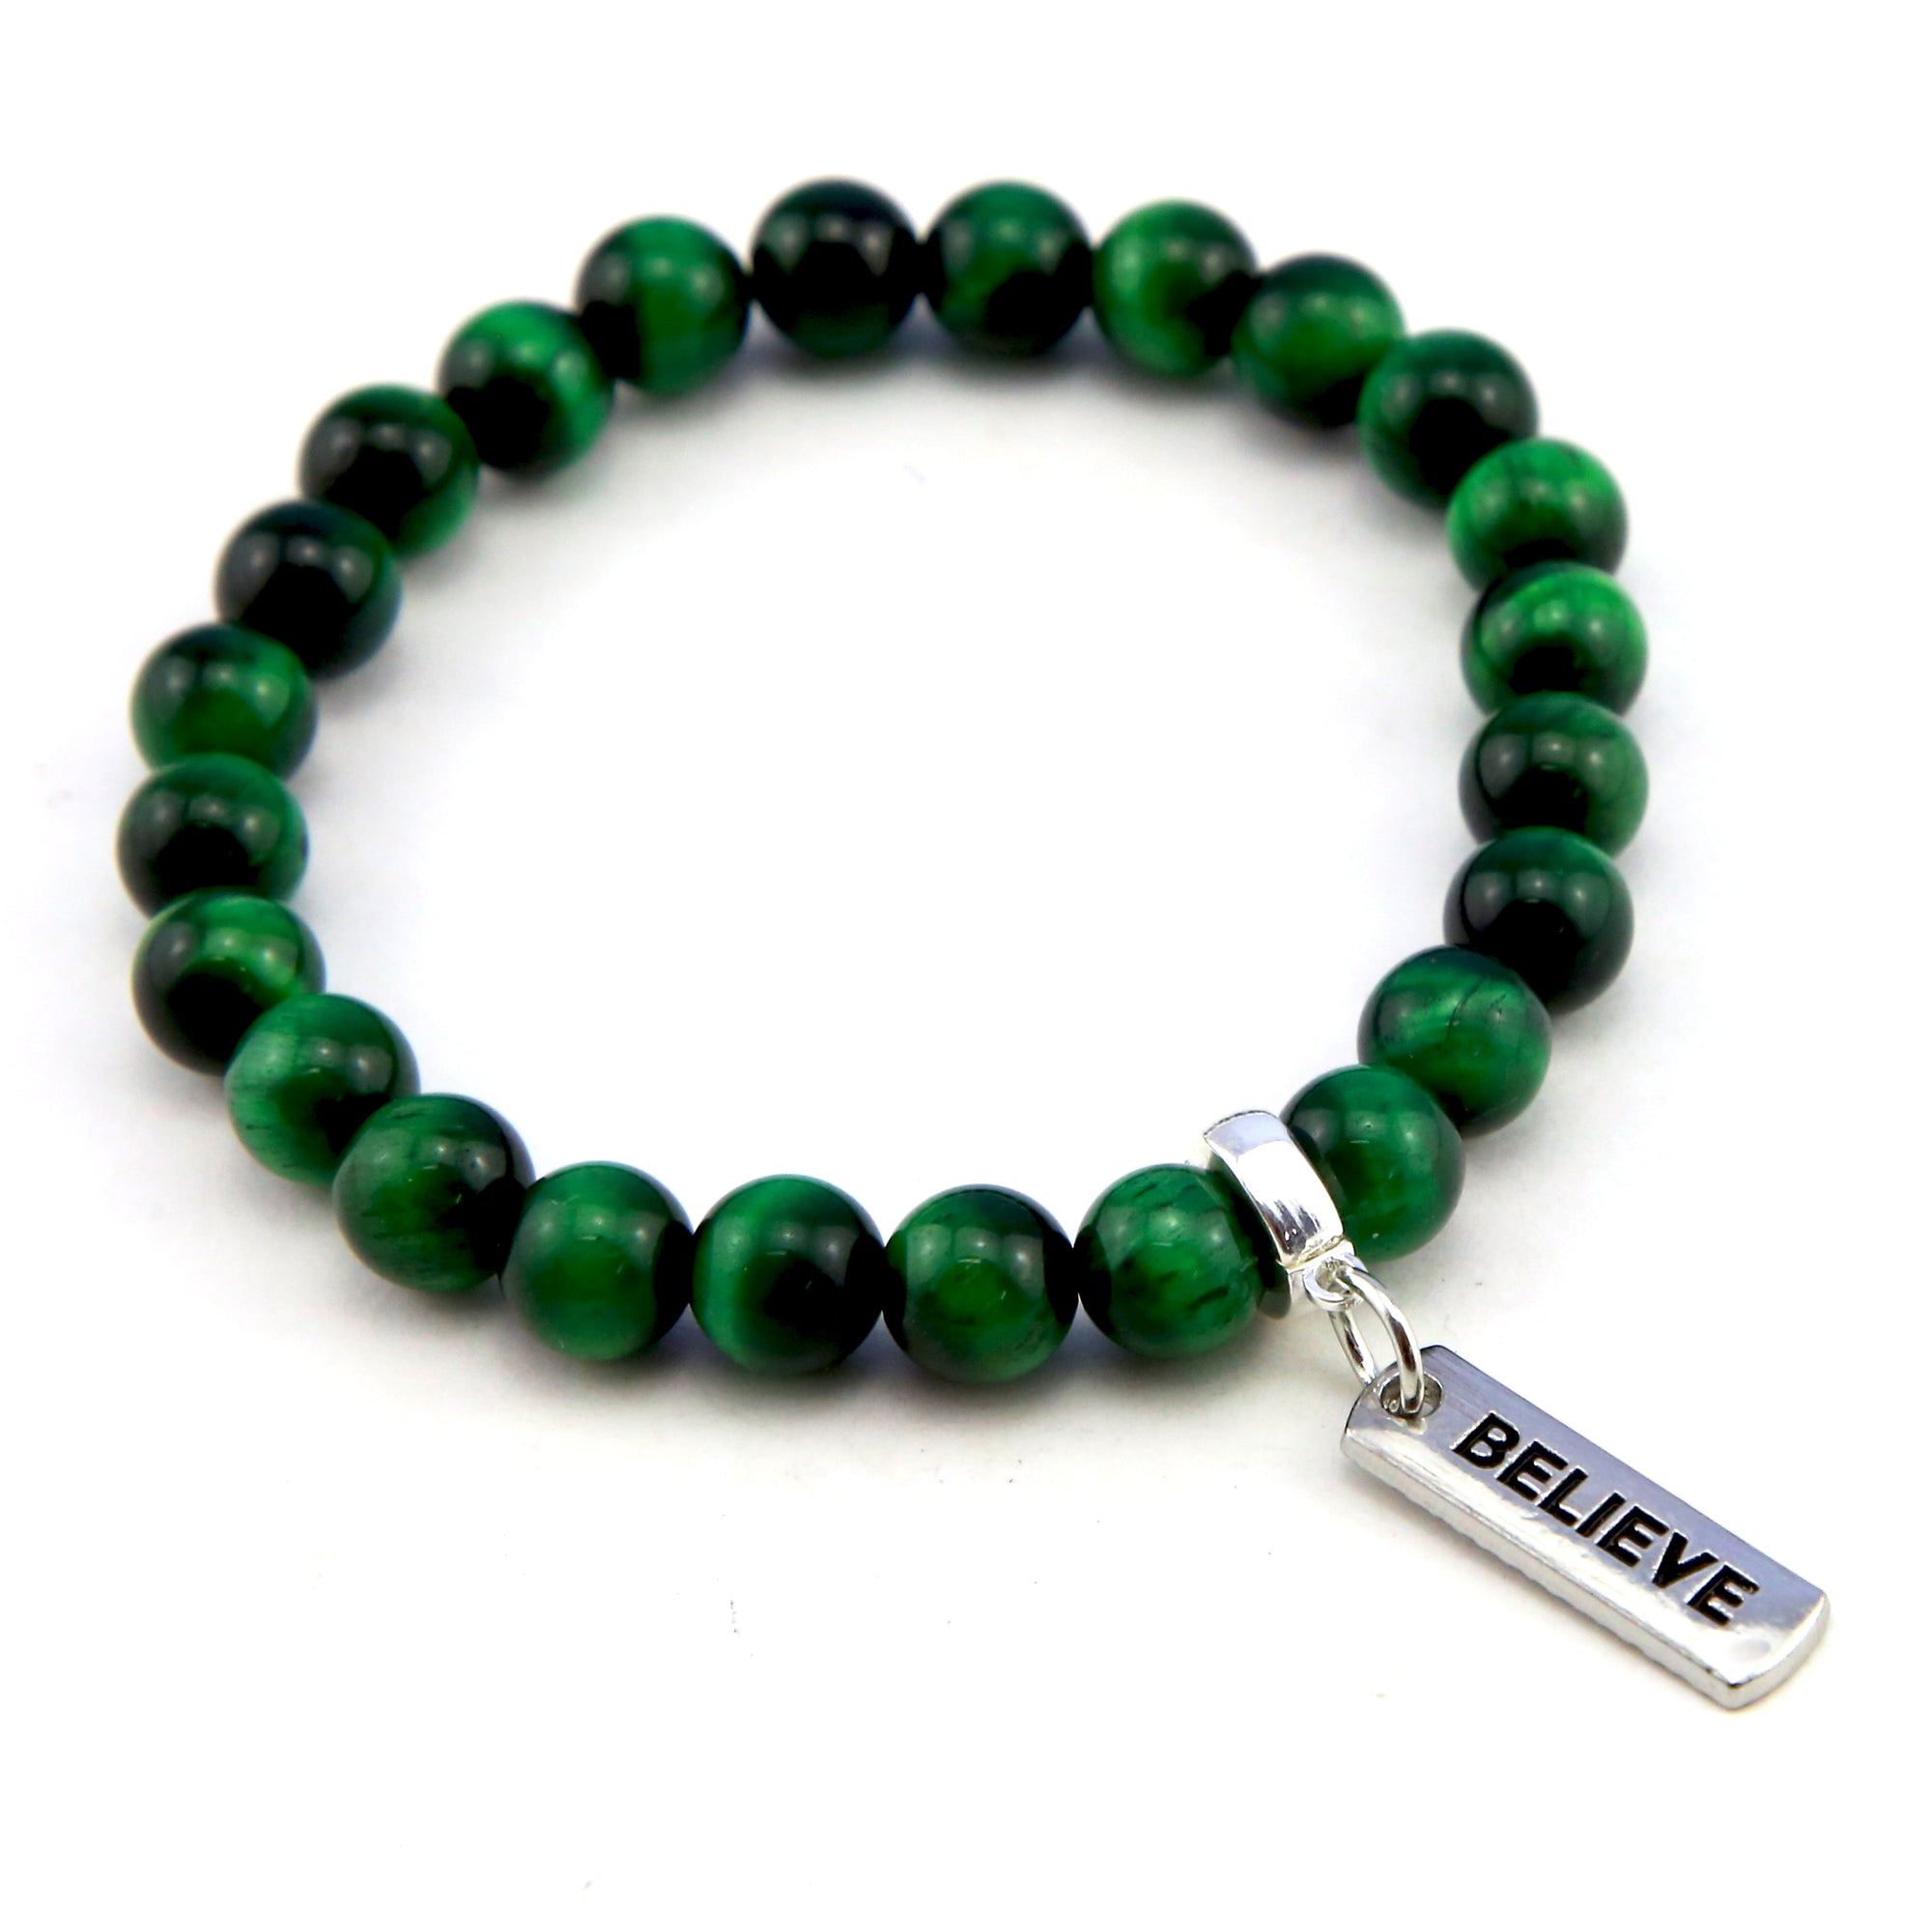 Green tigers eye bead bracelet 8mm sized beads with silver believe cute charm.